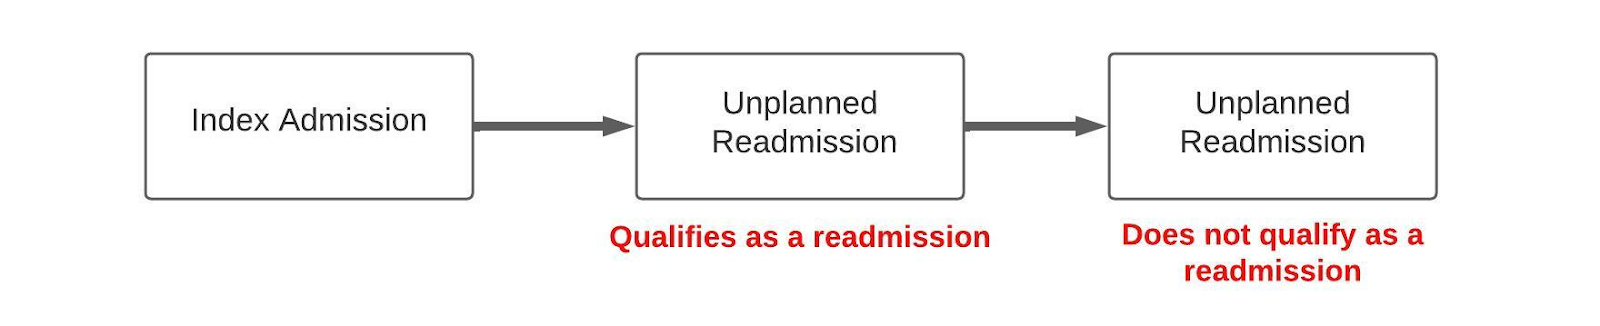 Unplanned Readmission 2